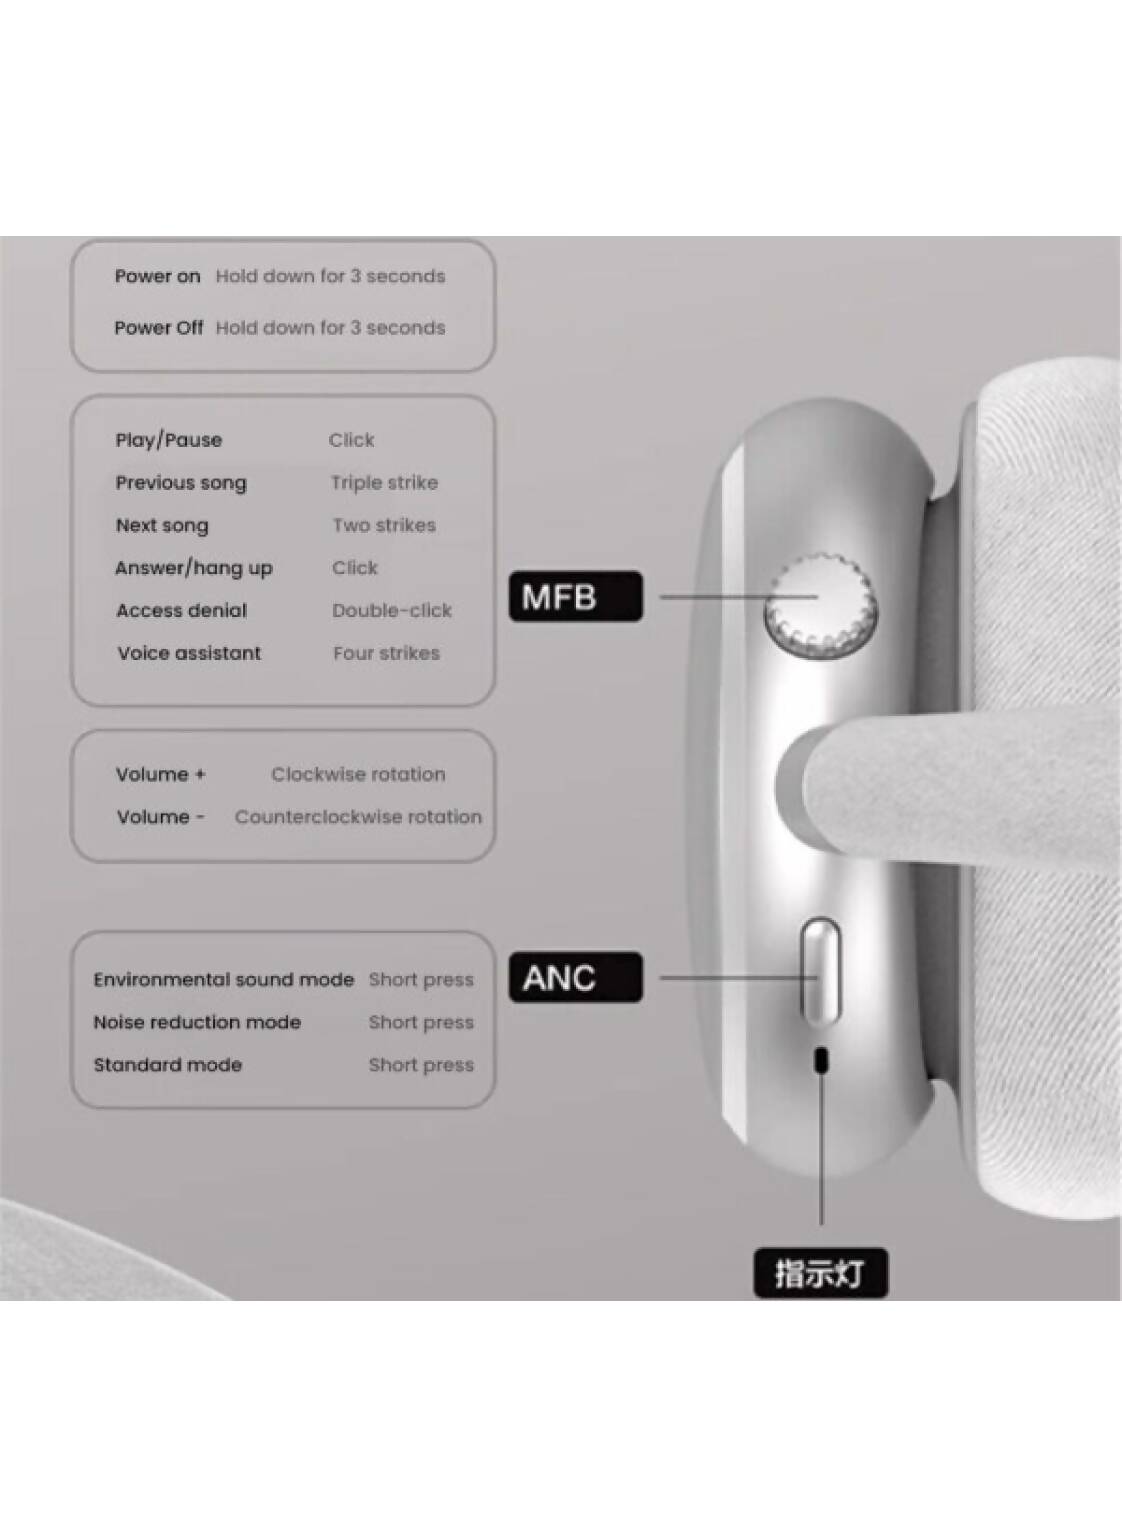 TONEMAC H5 ANC Wireless BT Headphones HIFI Gaming Headset